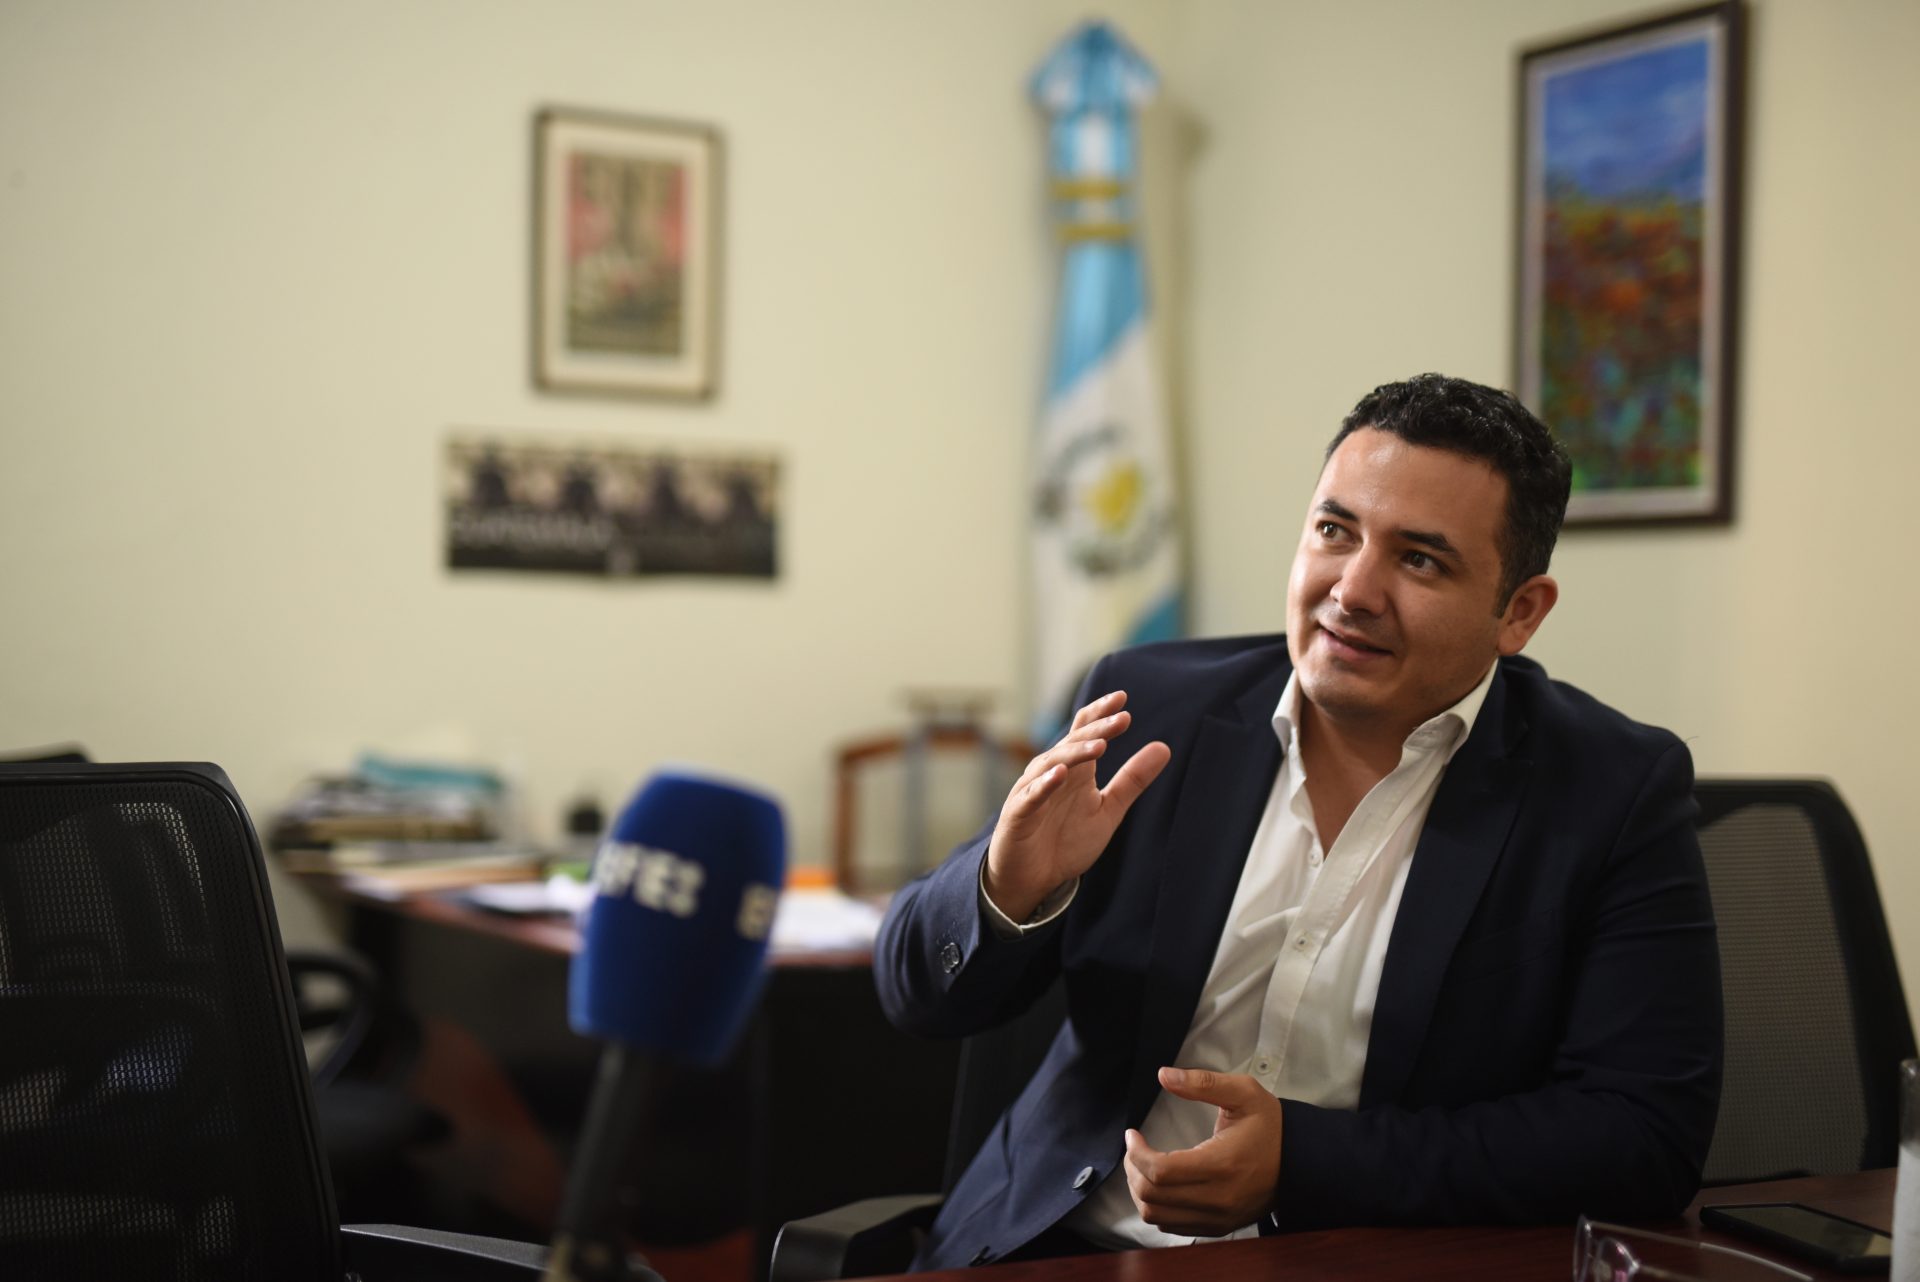 El presidente Giammattei “está detrás de intentos golpistas” en Guatemala, afirma un diputado